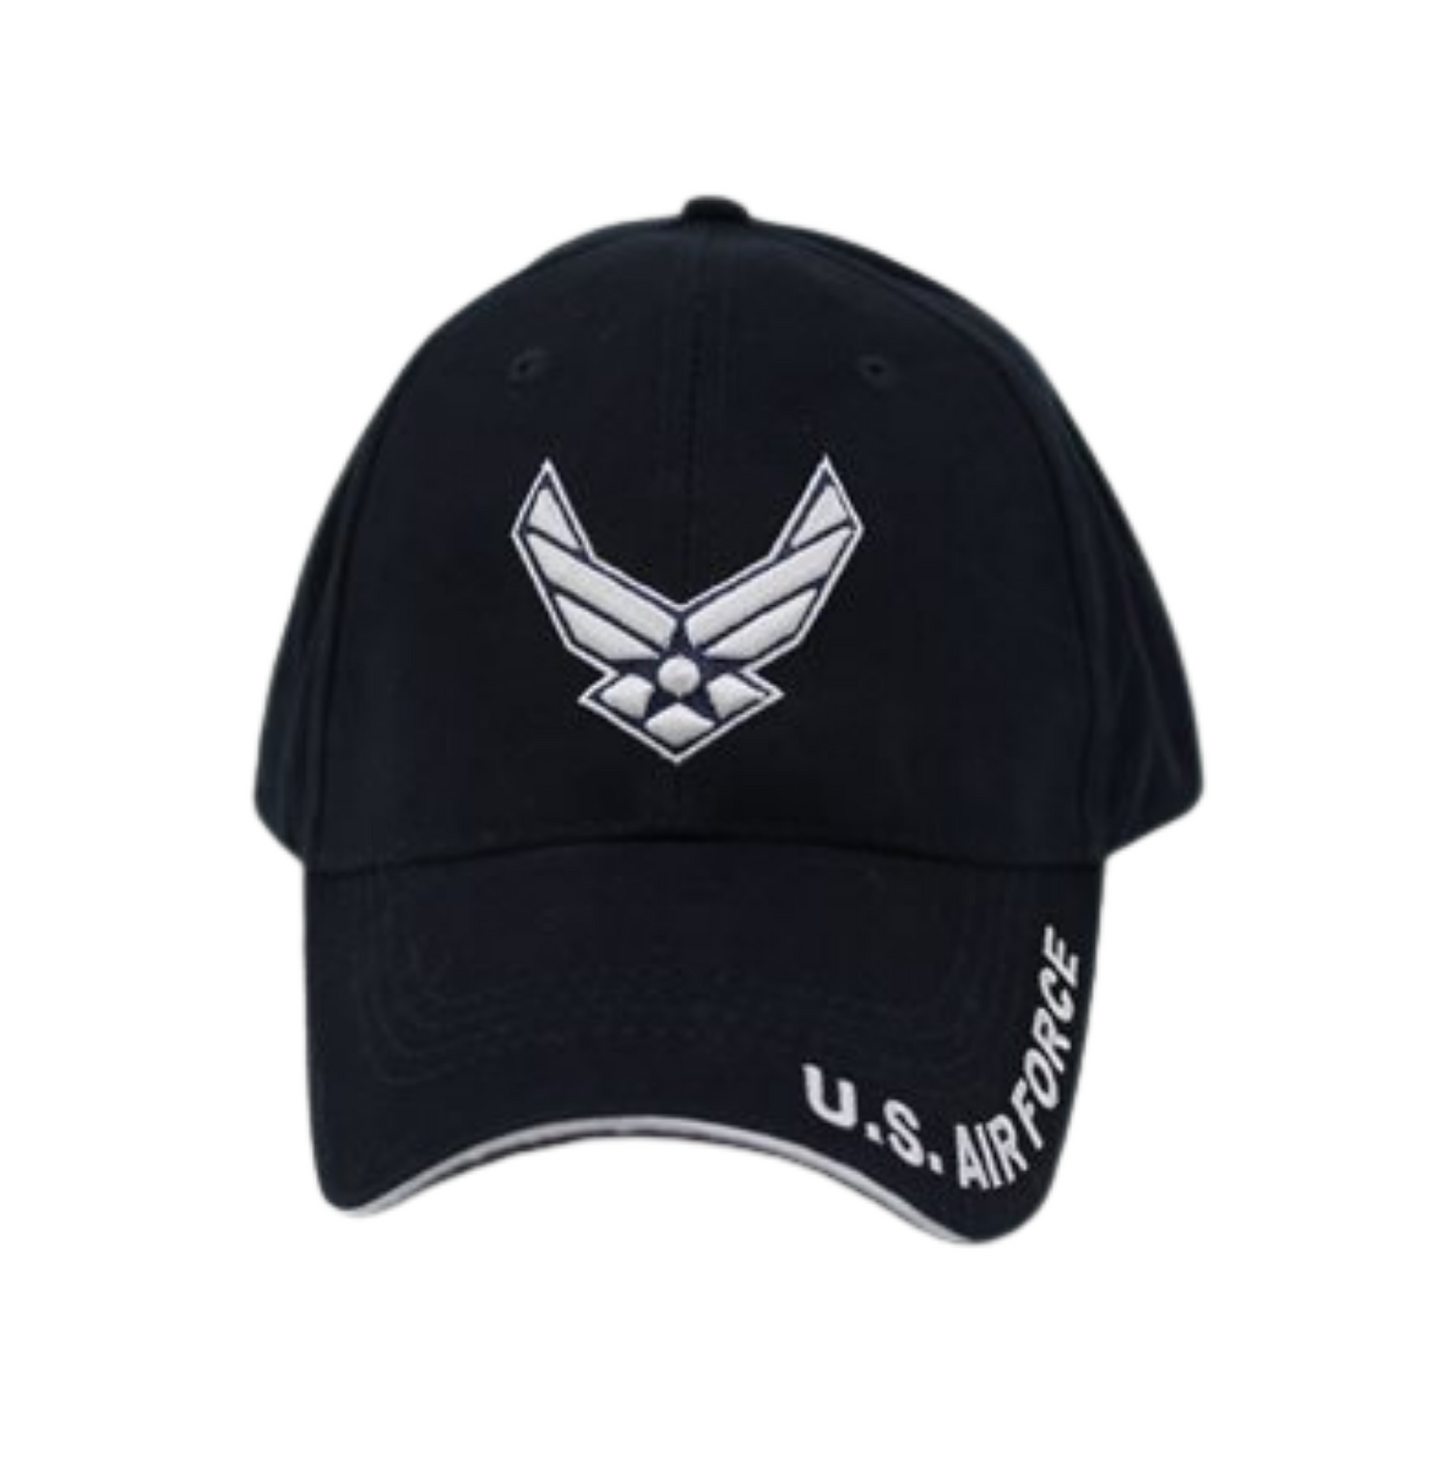 U.S. Air Force Logo Hat